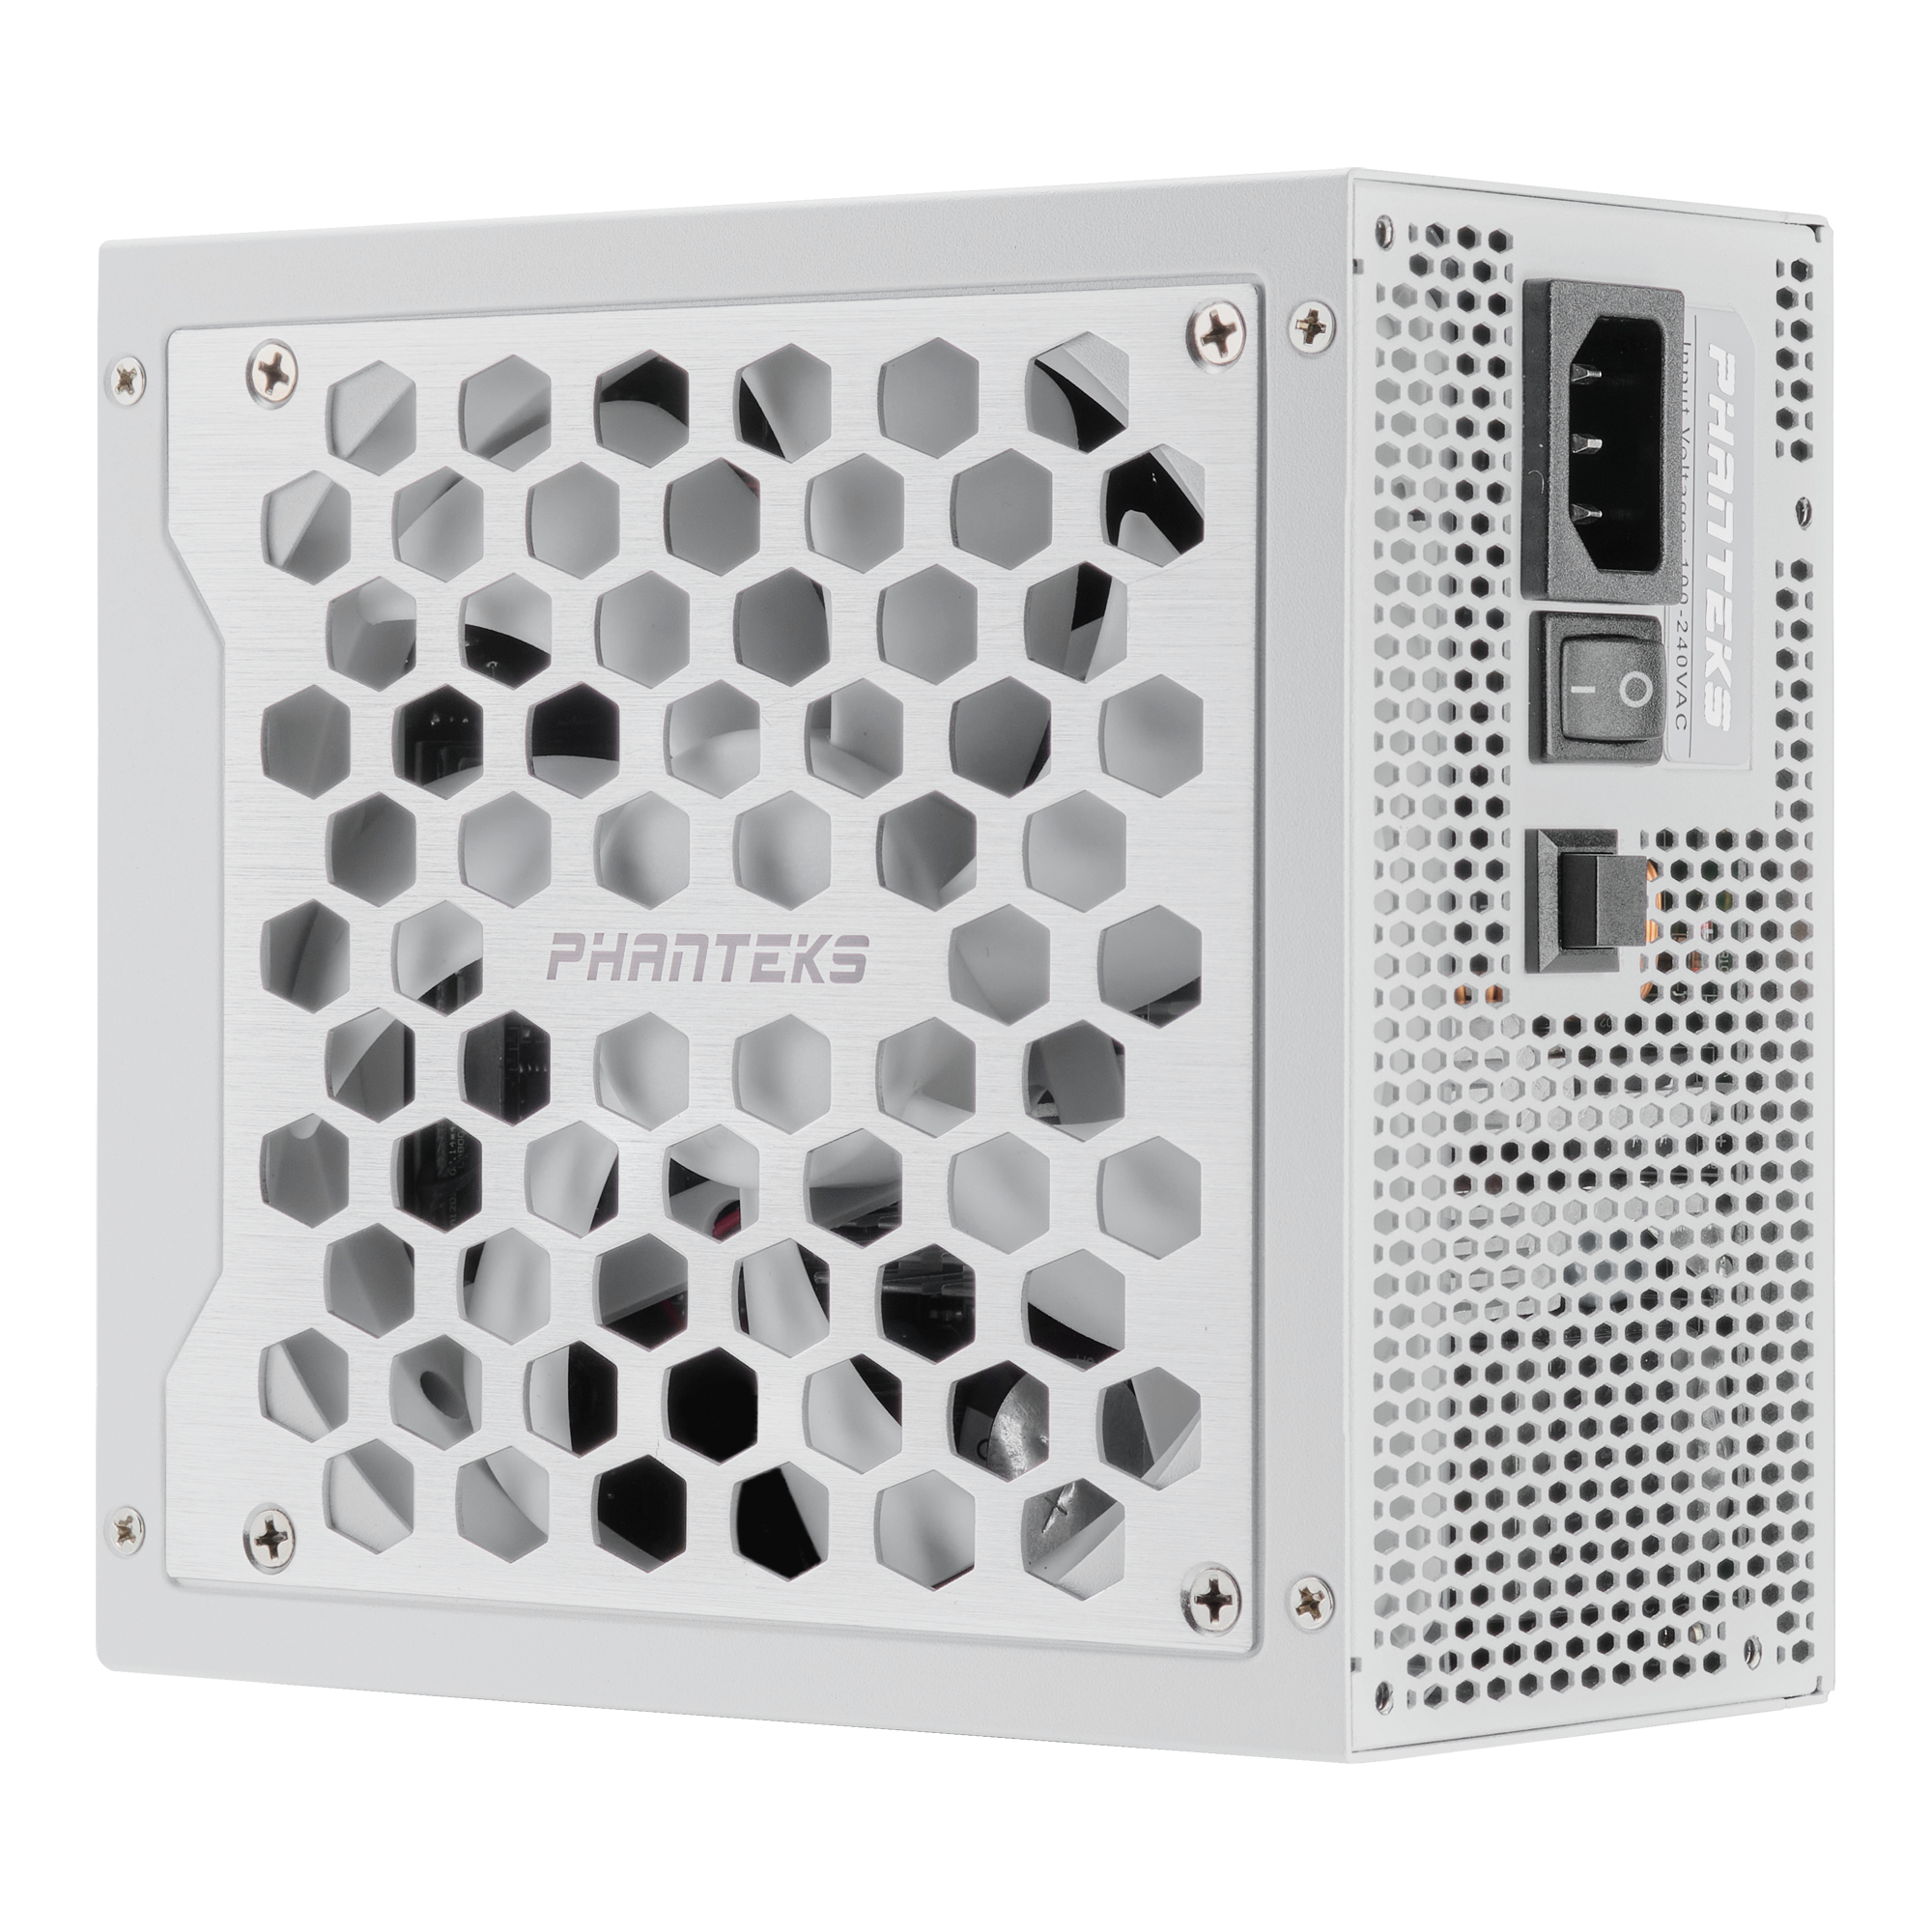 Phanteks - Phanteks Revolt Cableless 1000W ATX 3.0 PCIe 5.0 Modular 80 Plus Platinum Power Supply - White